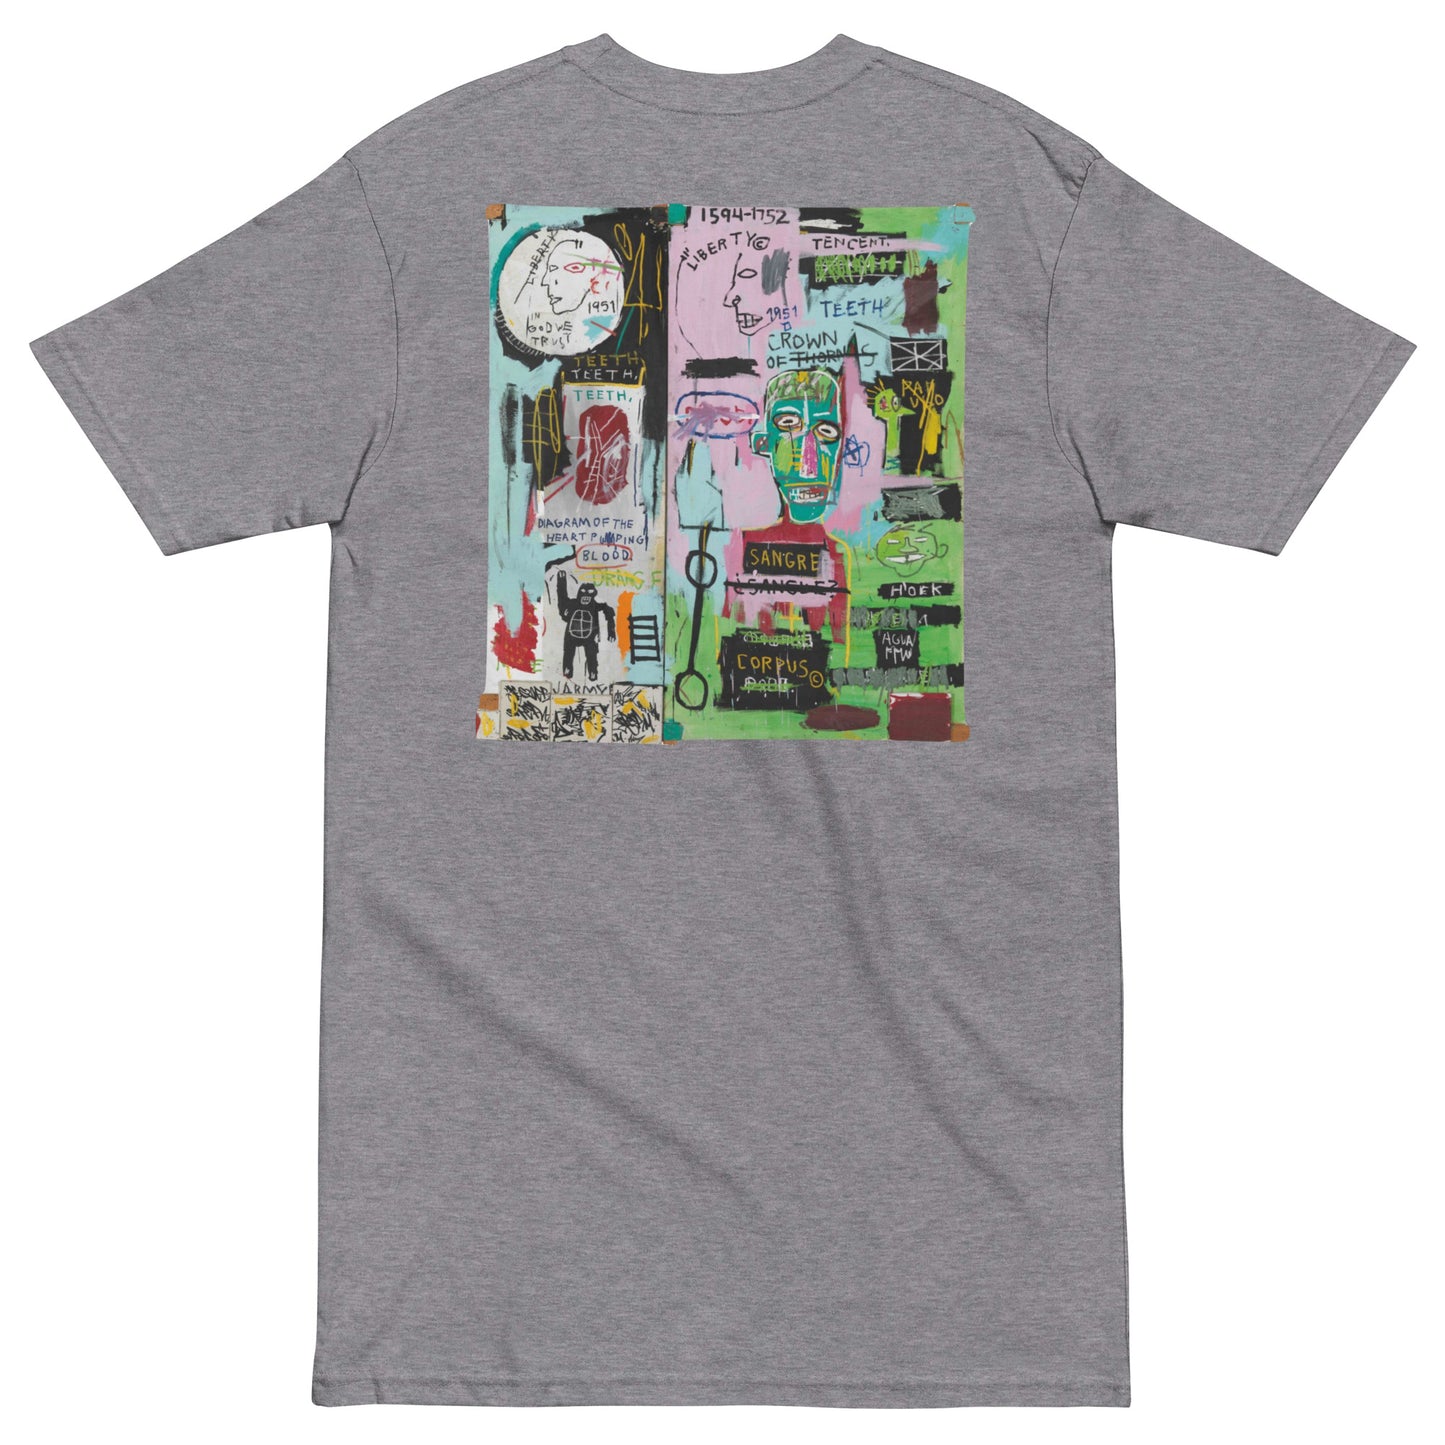 Jean-Michel Basquiat "In Italian" Artwork Embroidered and Printed Premium Streetwear T-Shirt Grey